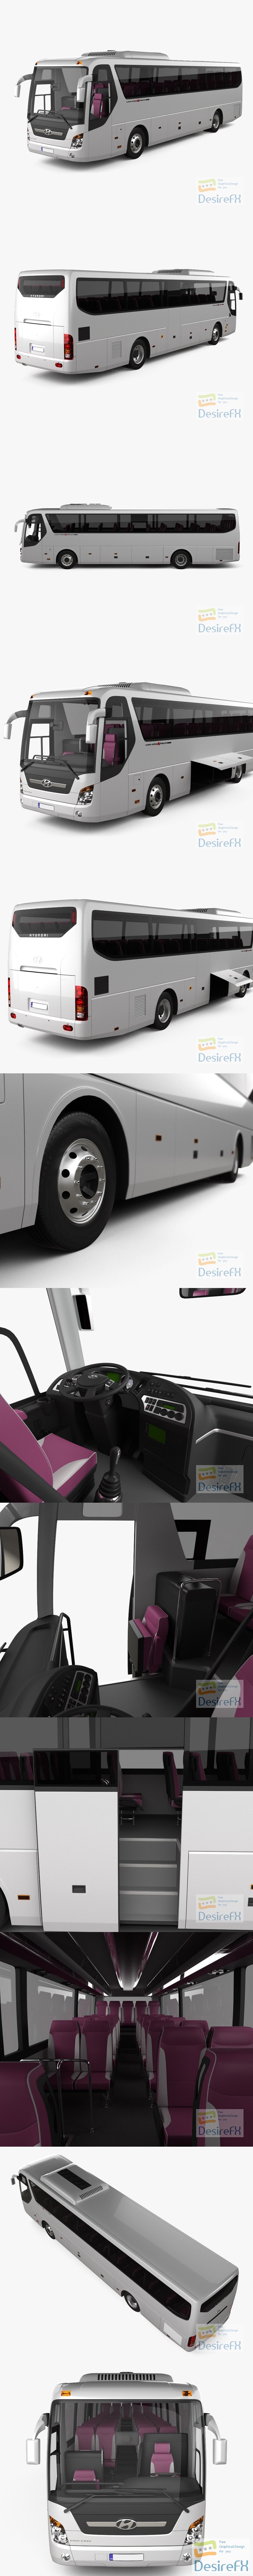 Hyundai Universe Xpress Noble Bus with HQ interior 2010 3D Model